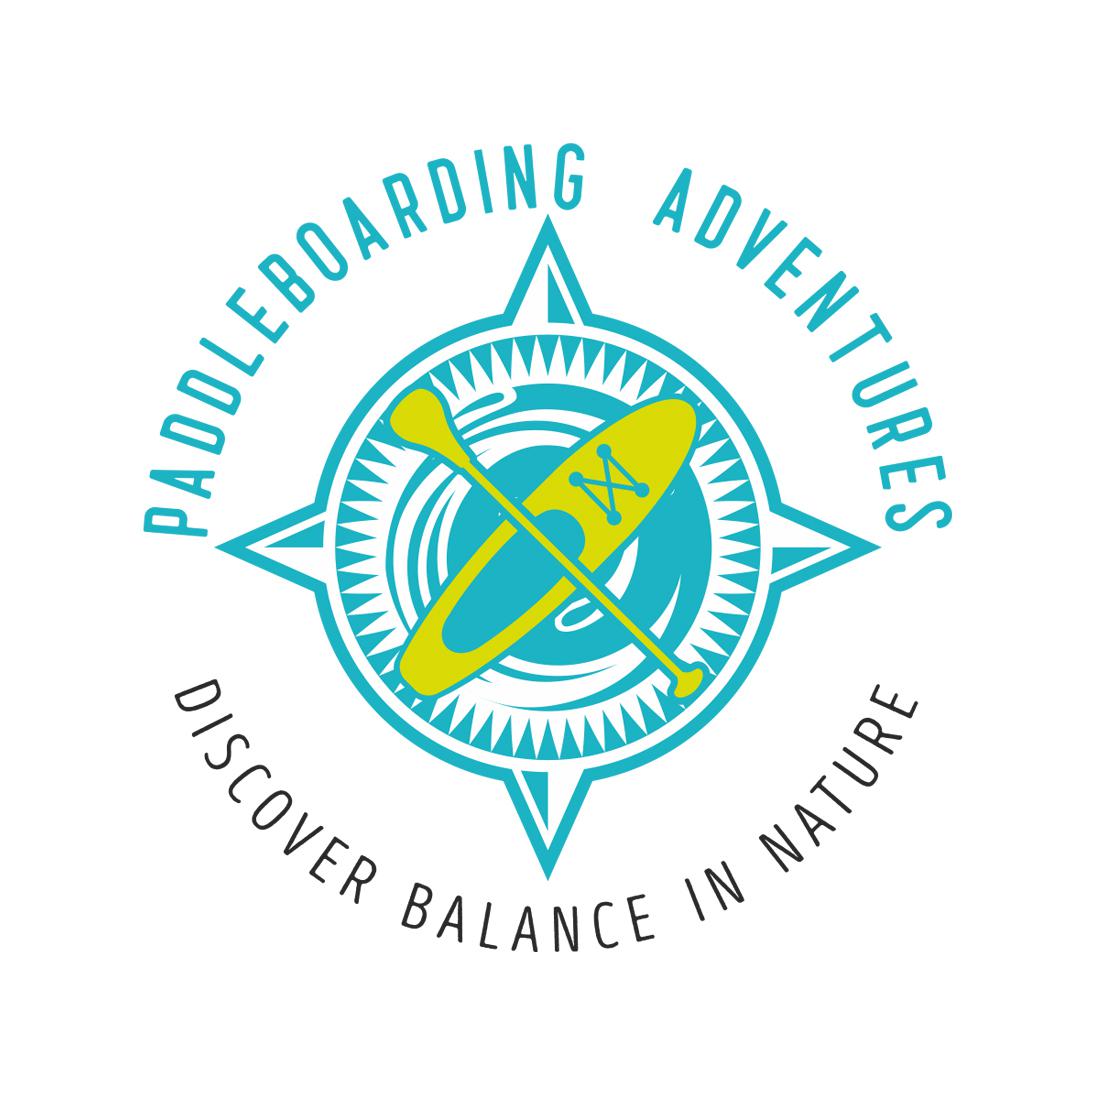 paddle boarding adventures logo